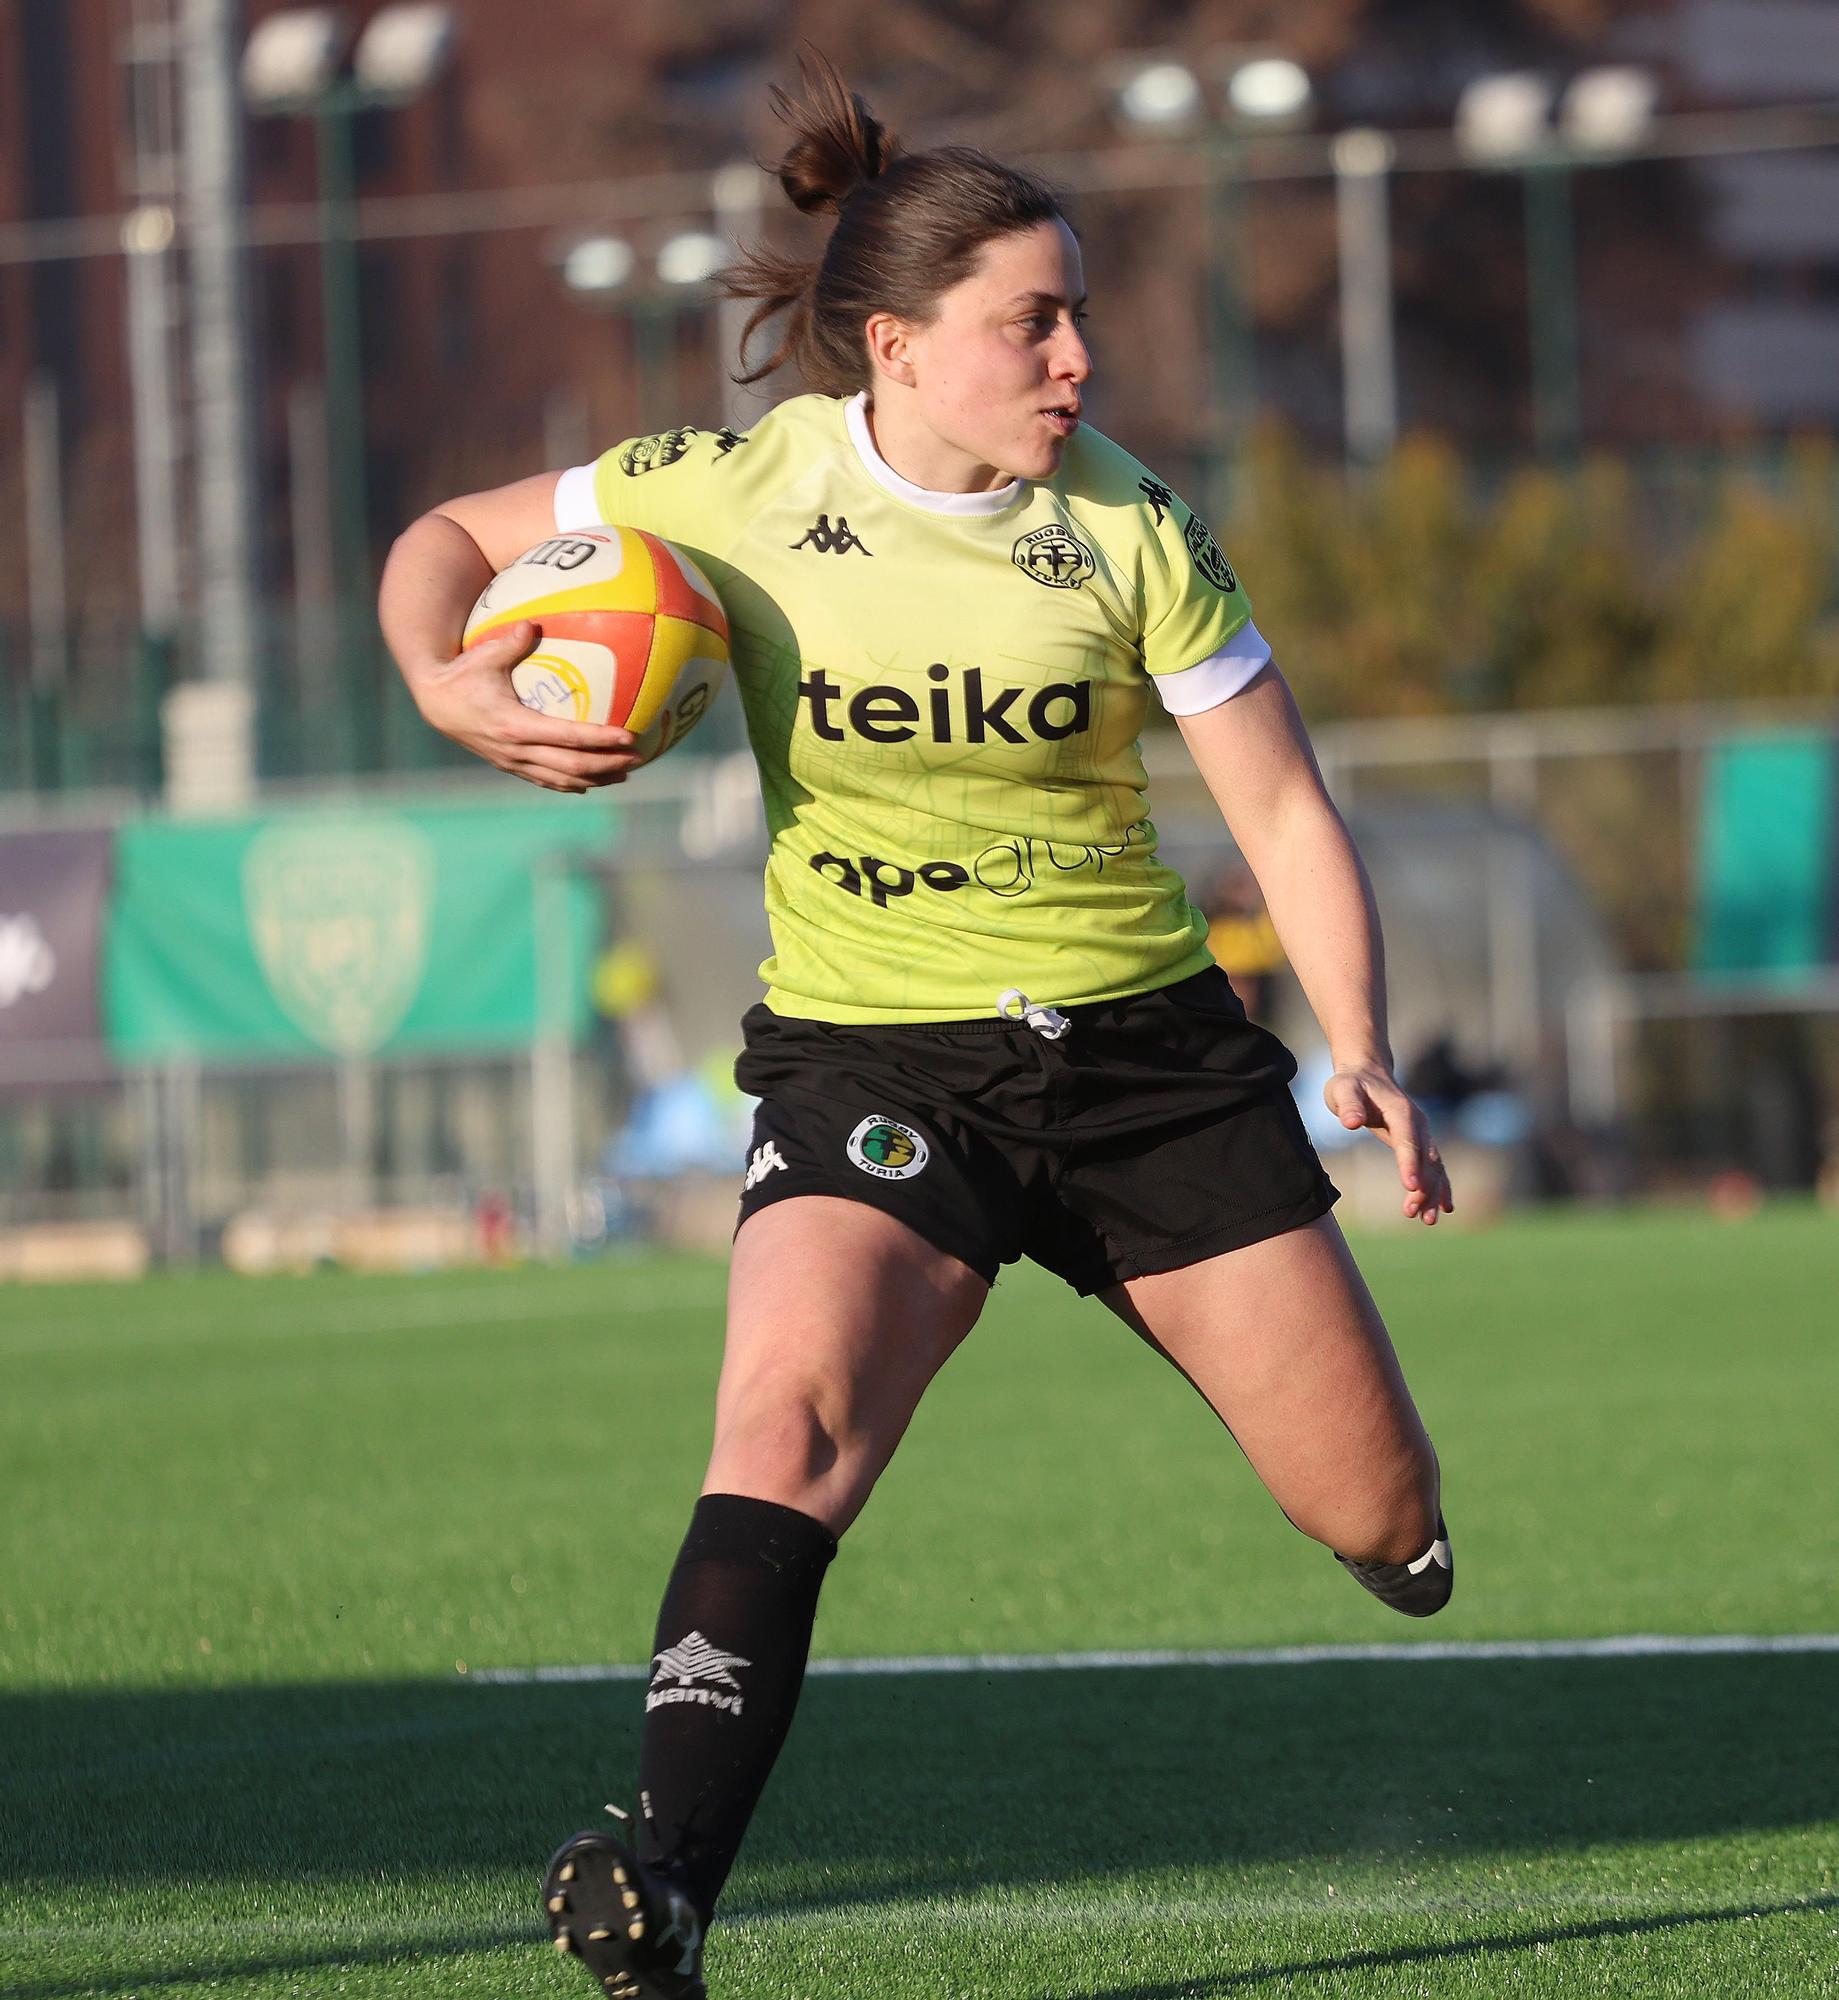 Teika Les Abelles - Rugby Turia